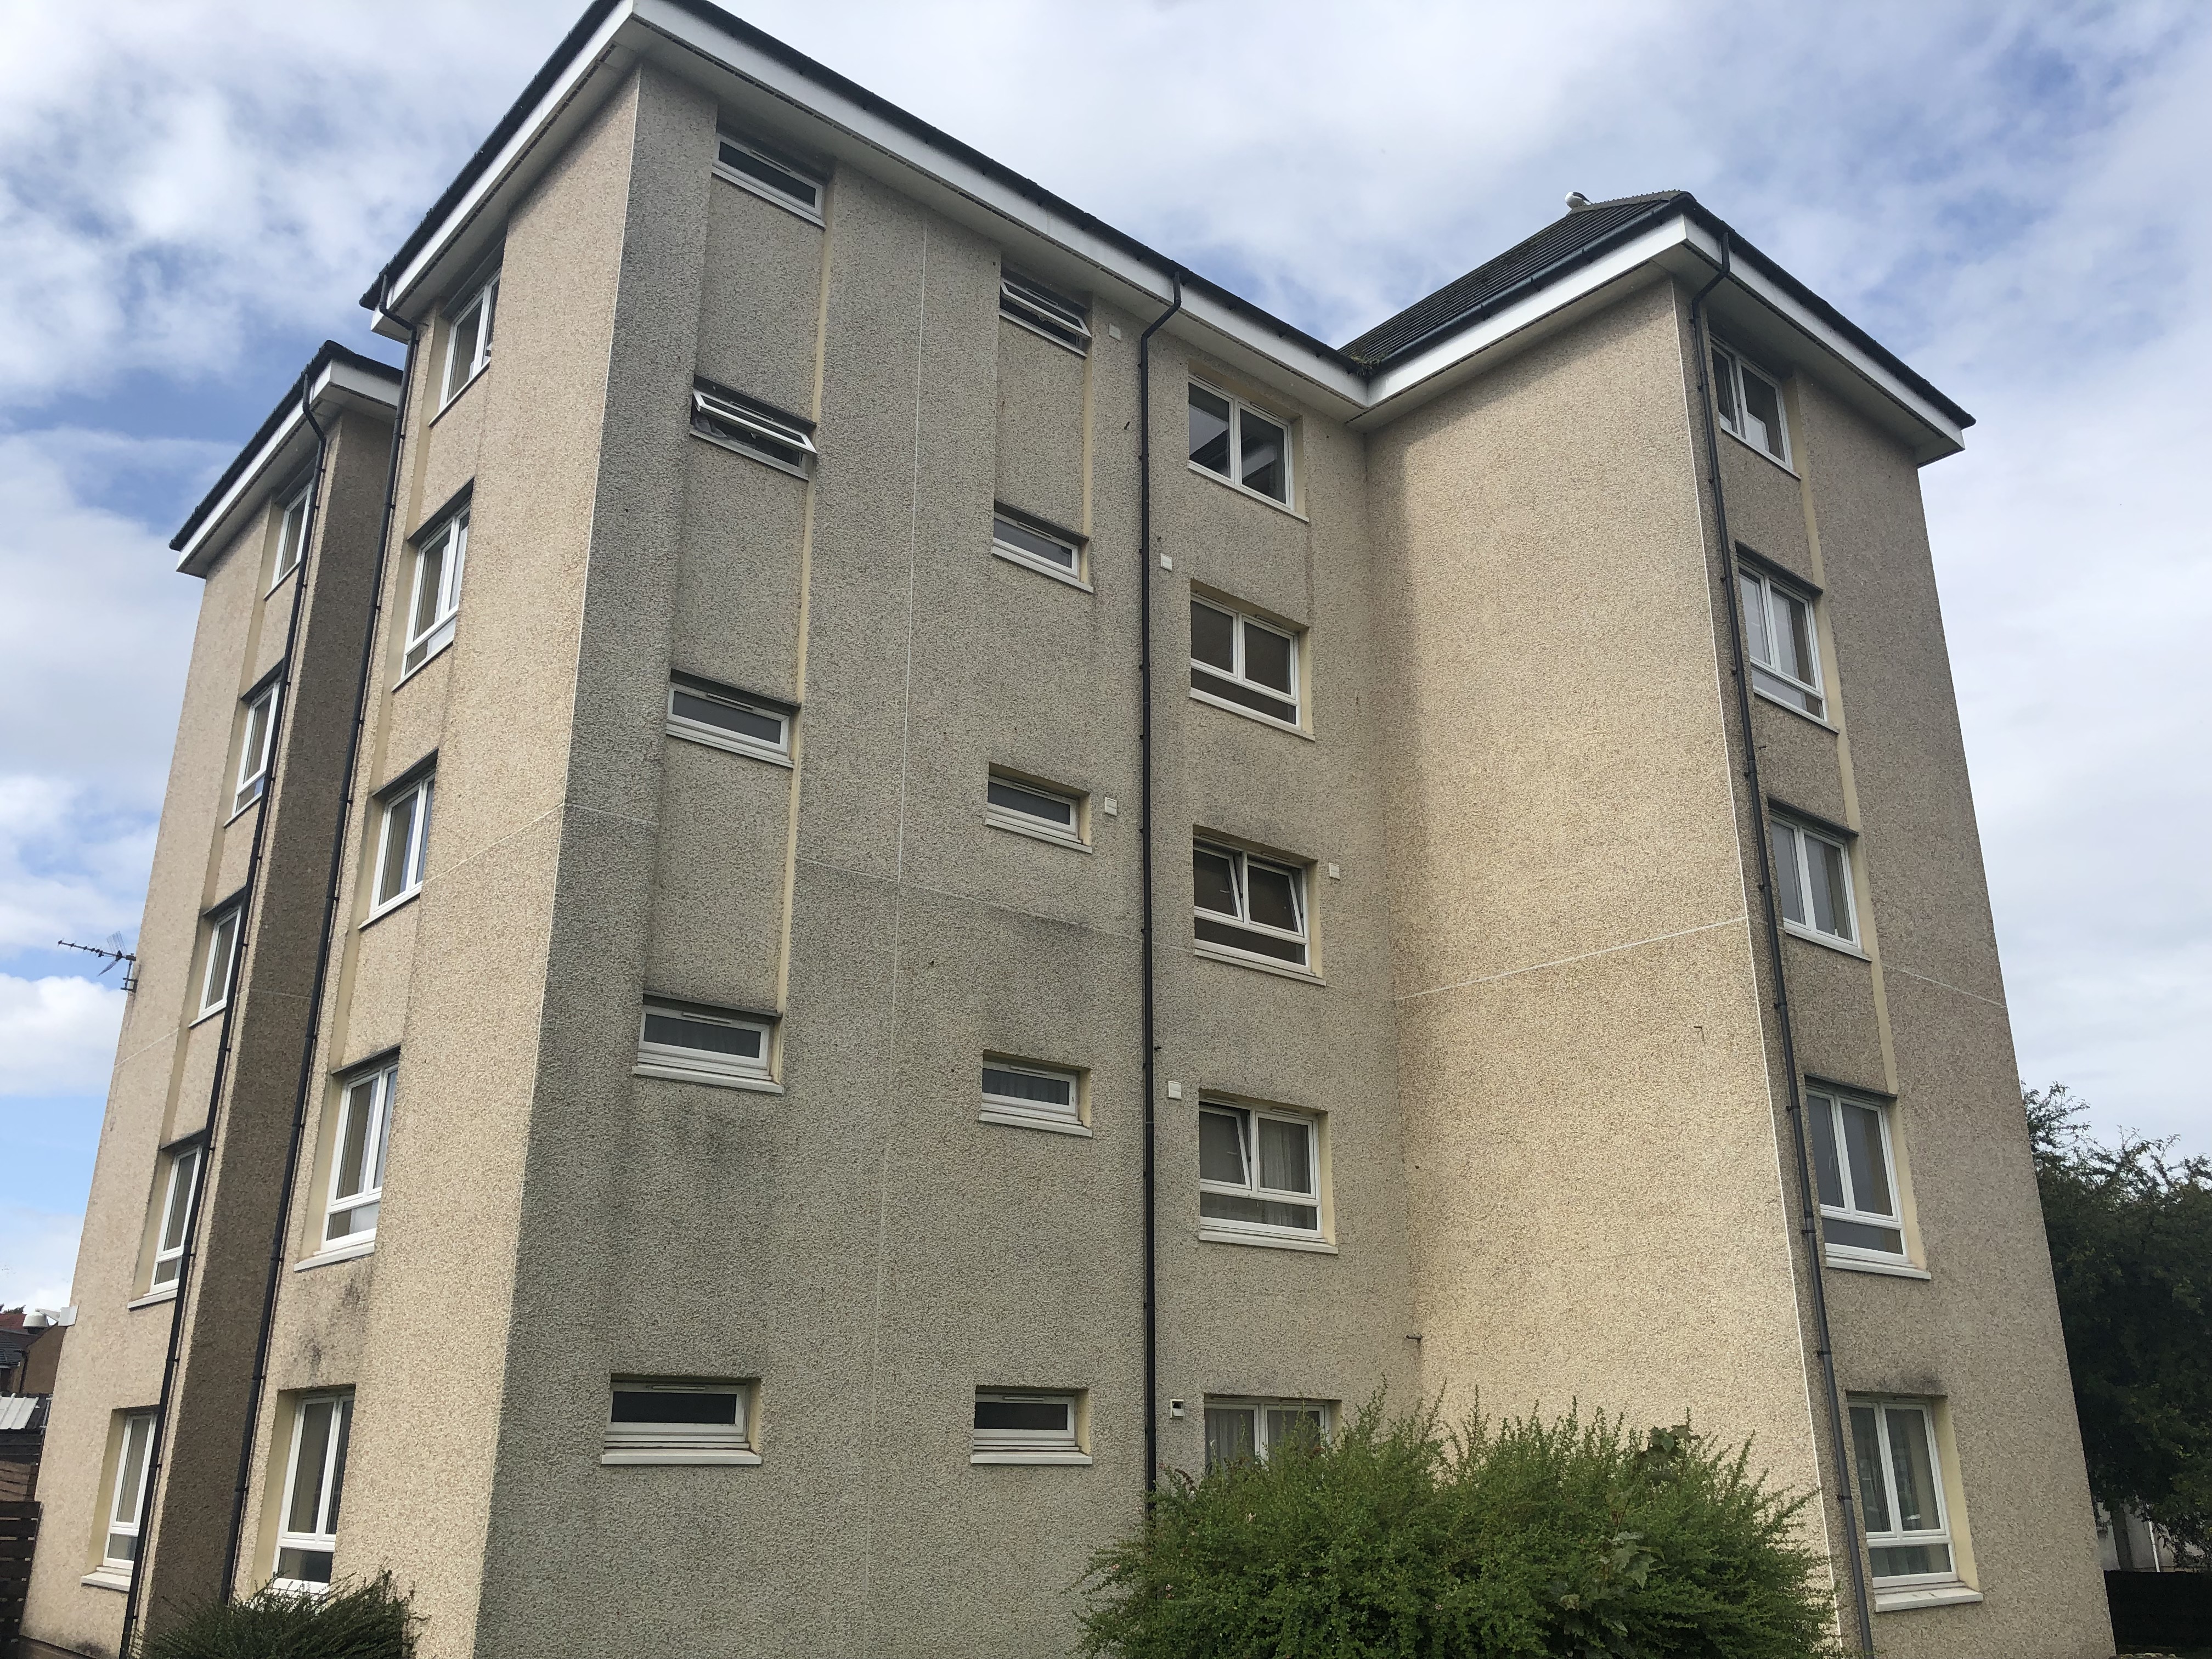 Plans progress to demolish former Stirling homeless accommodation for new homes